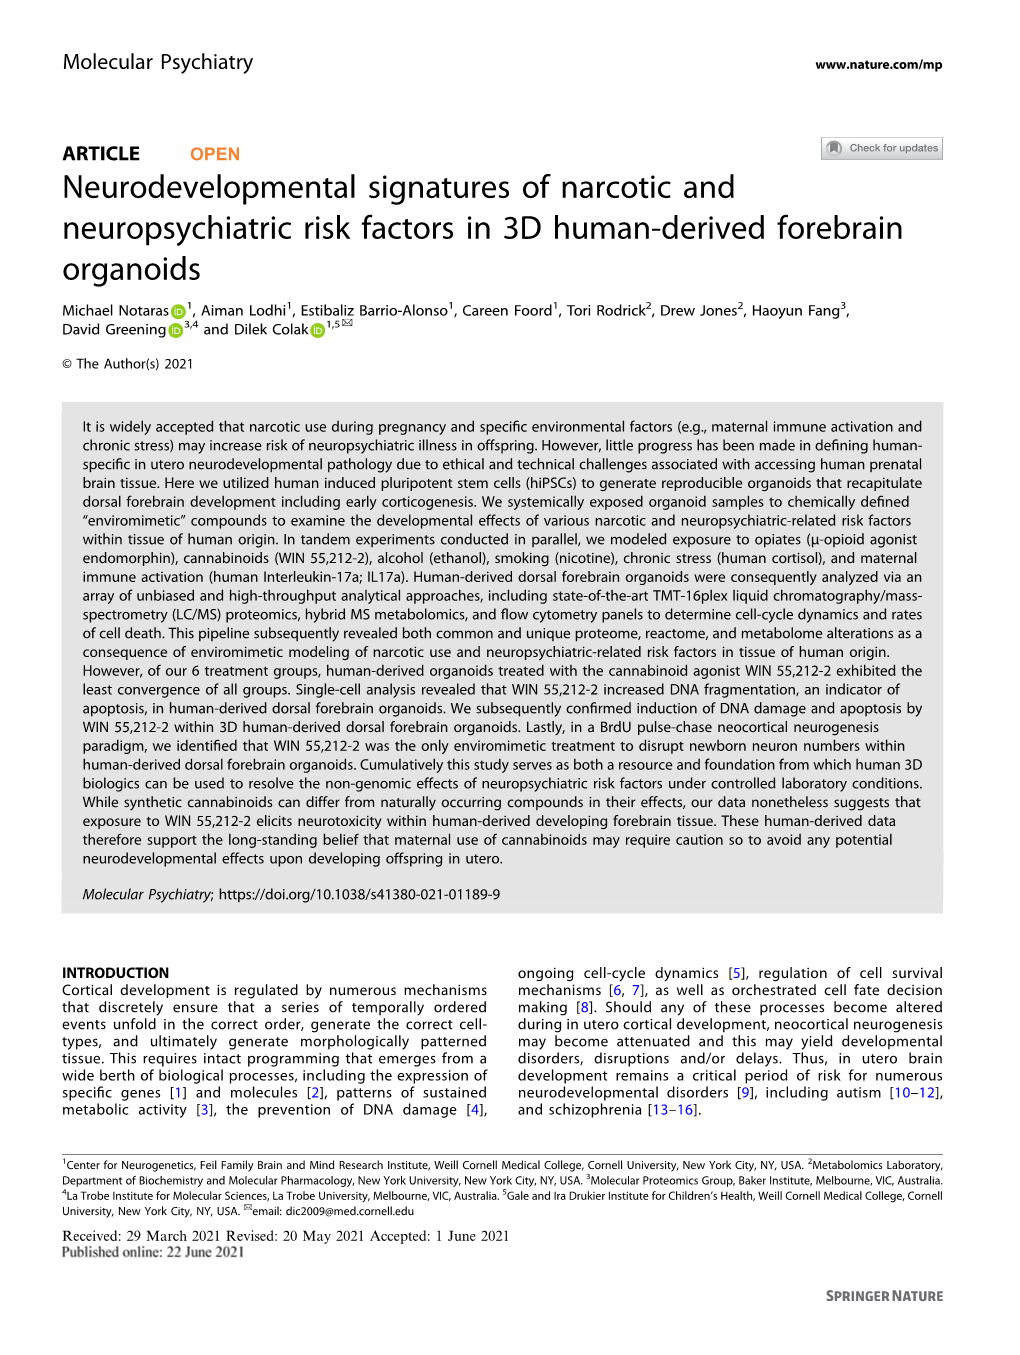 Neurodevelopmental Signatures of Narcotic and Neuropsychiatric Risk Factors in 3D Human-Derived Forebrain Organoids